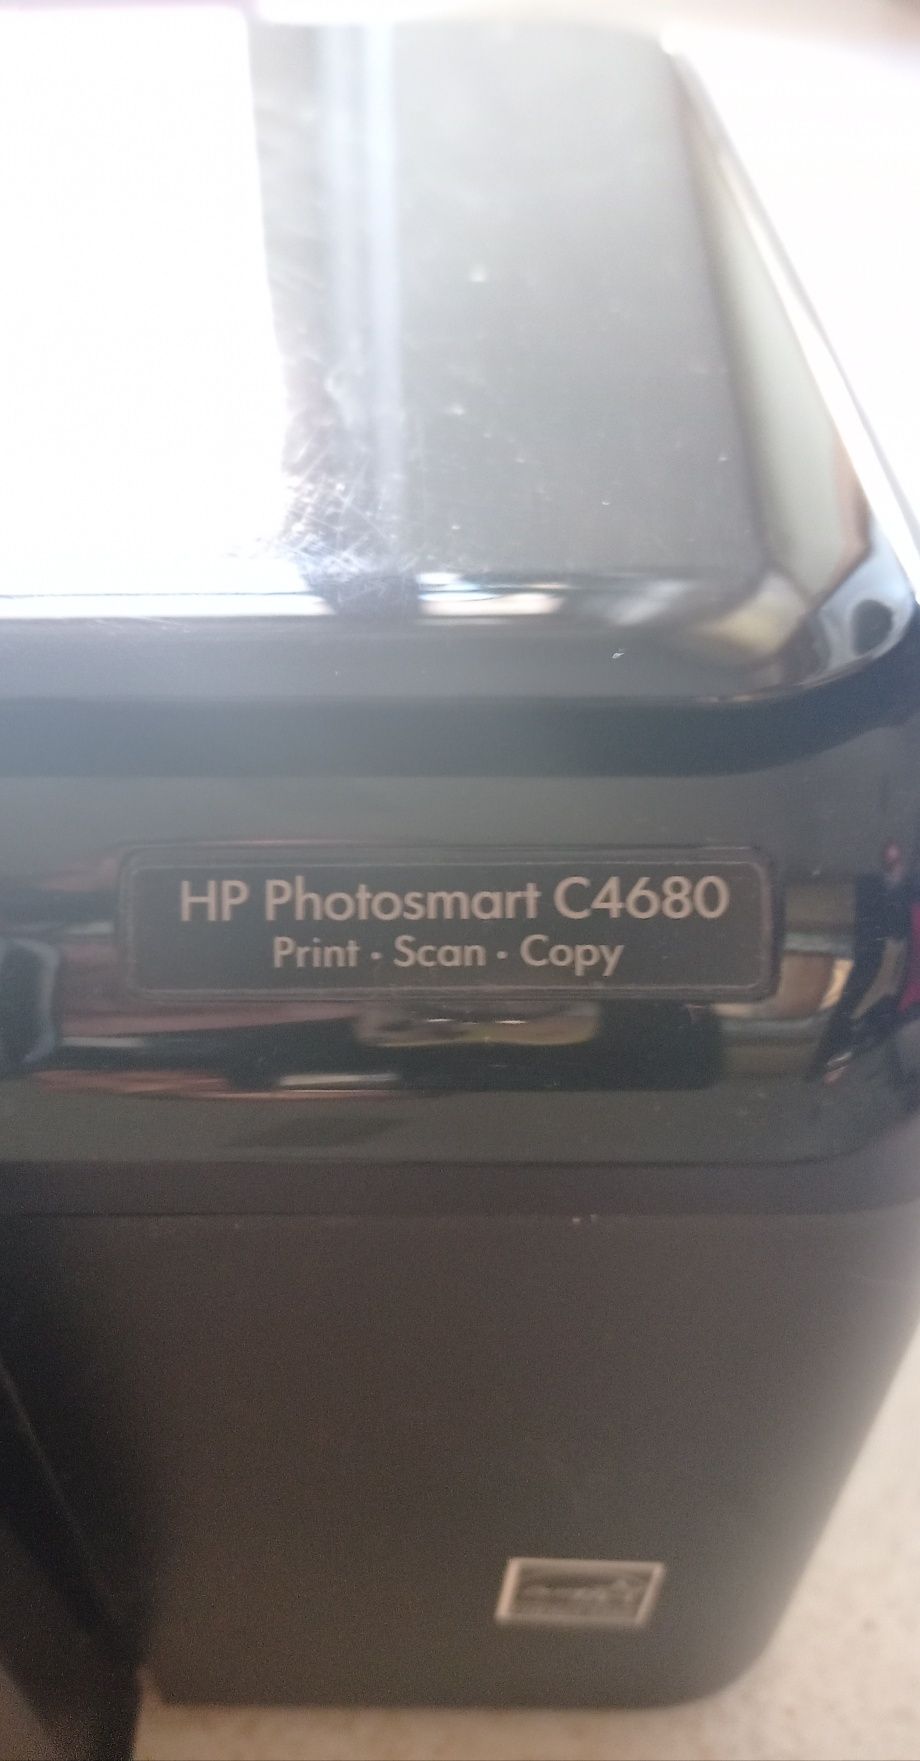 Impressora multifunções - HP Photoshop C4680